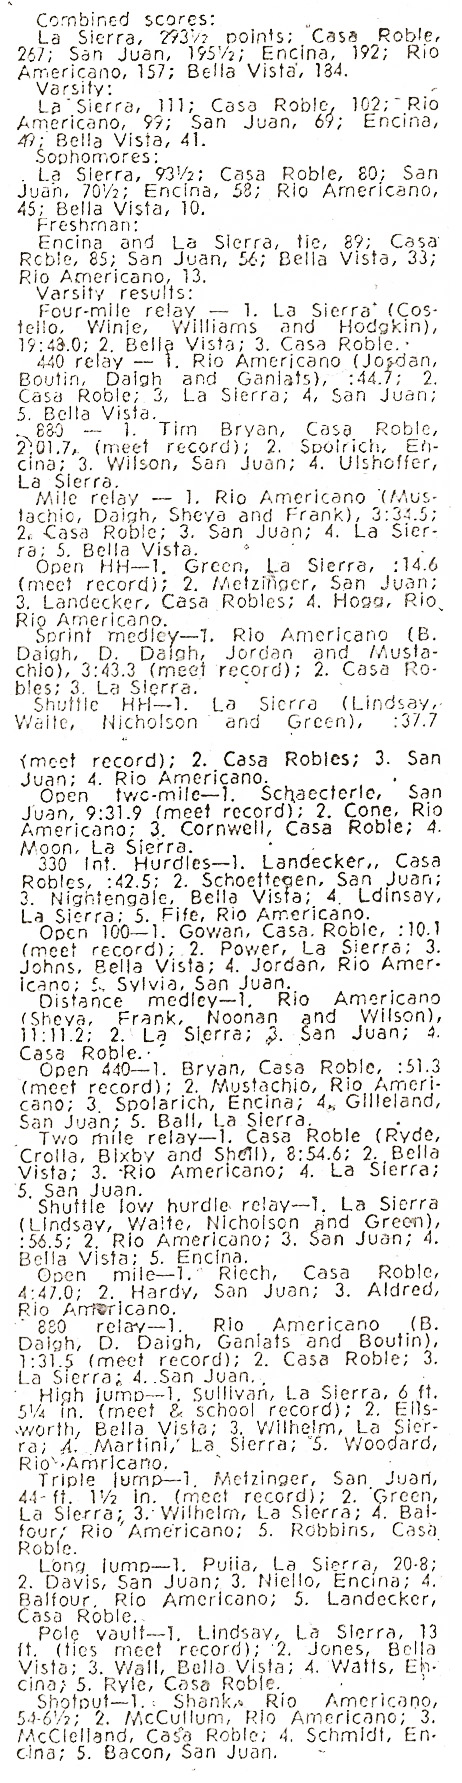 1971 Longhorn Invitational Results